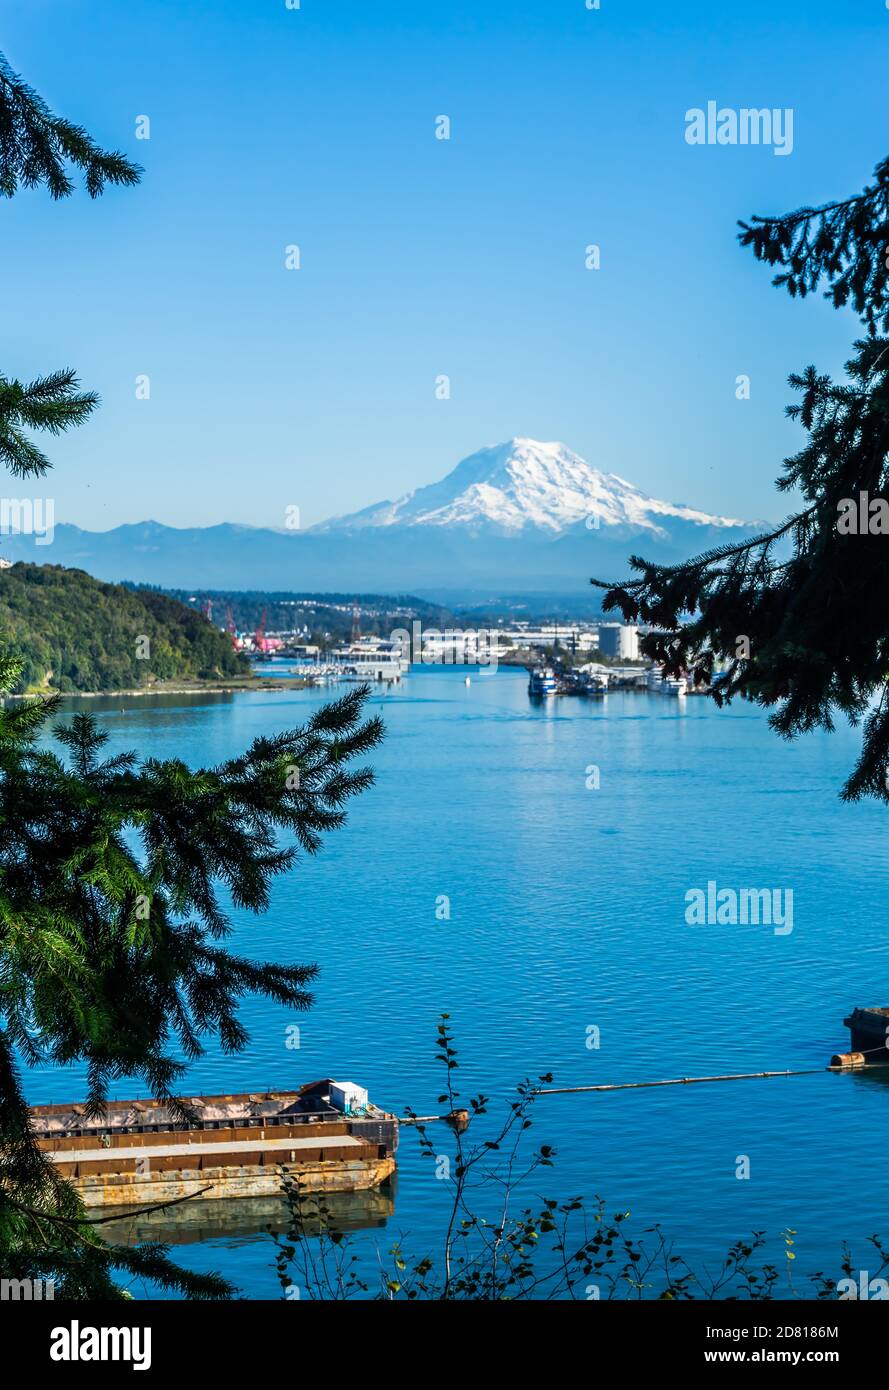 an illustraion of the Port of Tacoma and Mount Rainier. Stock Photo